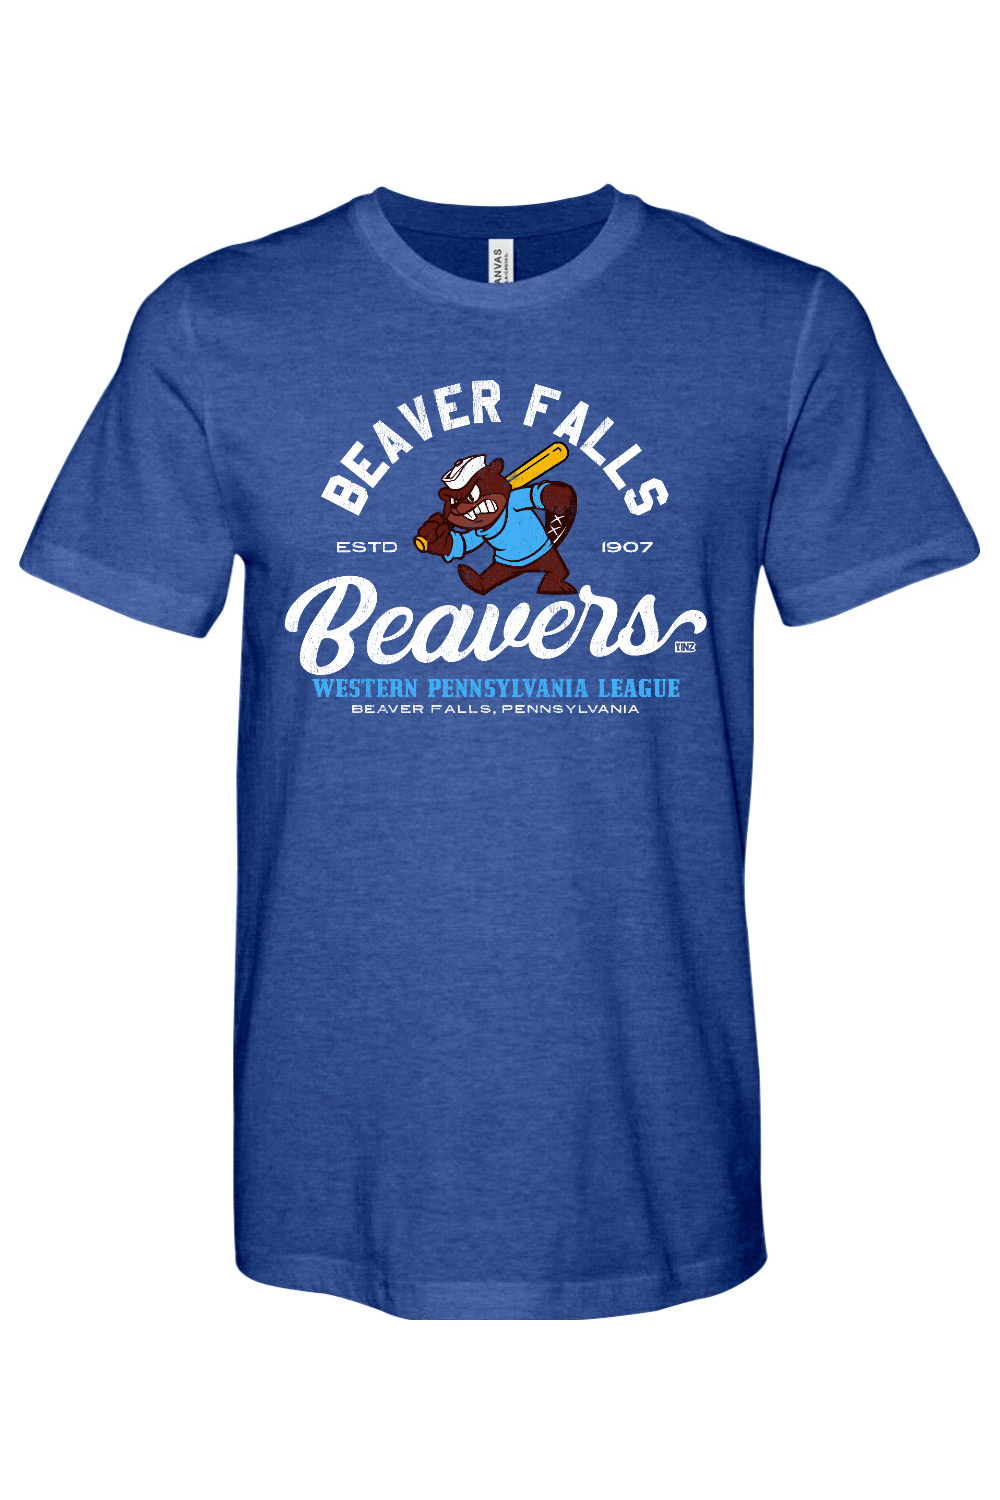 Beaver Falls Beavers Baseball - 1907 - Yinzylvania